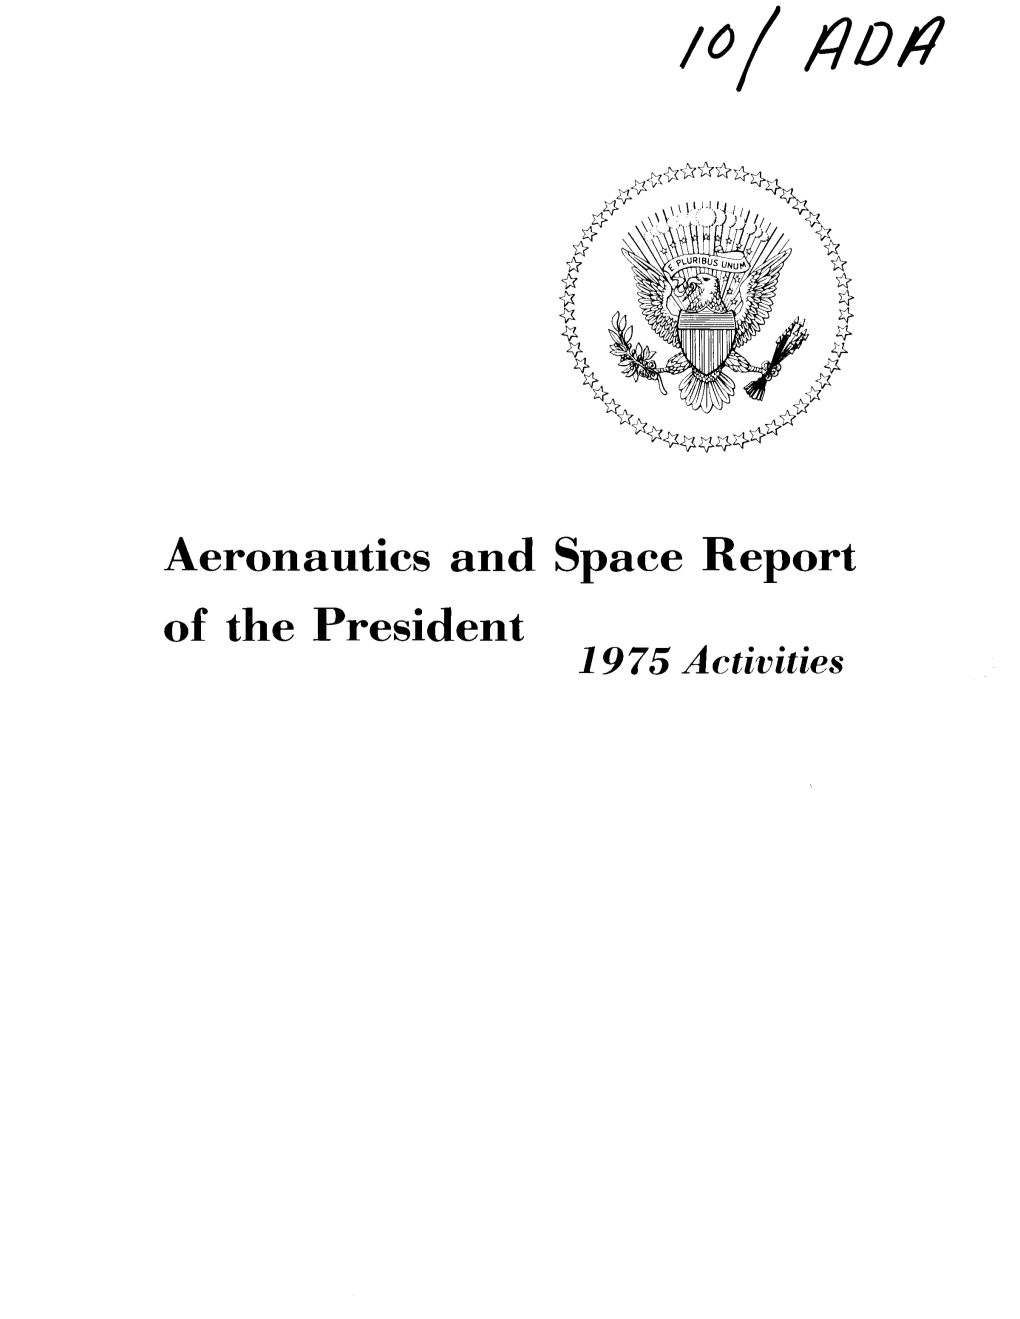 Aeronautics and Space Report of the President